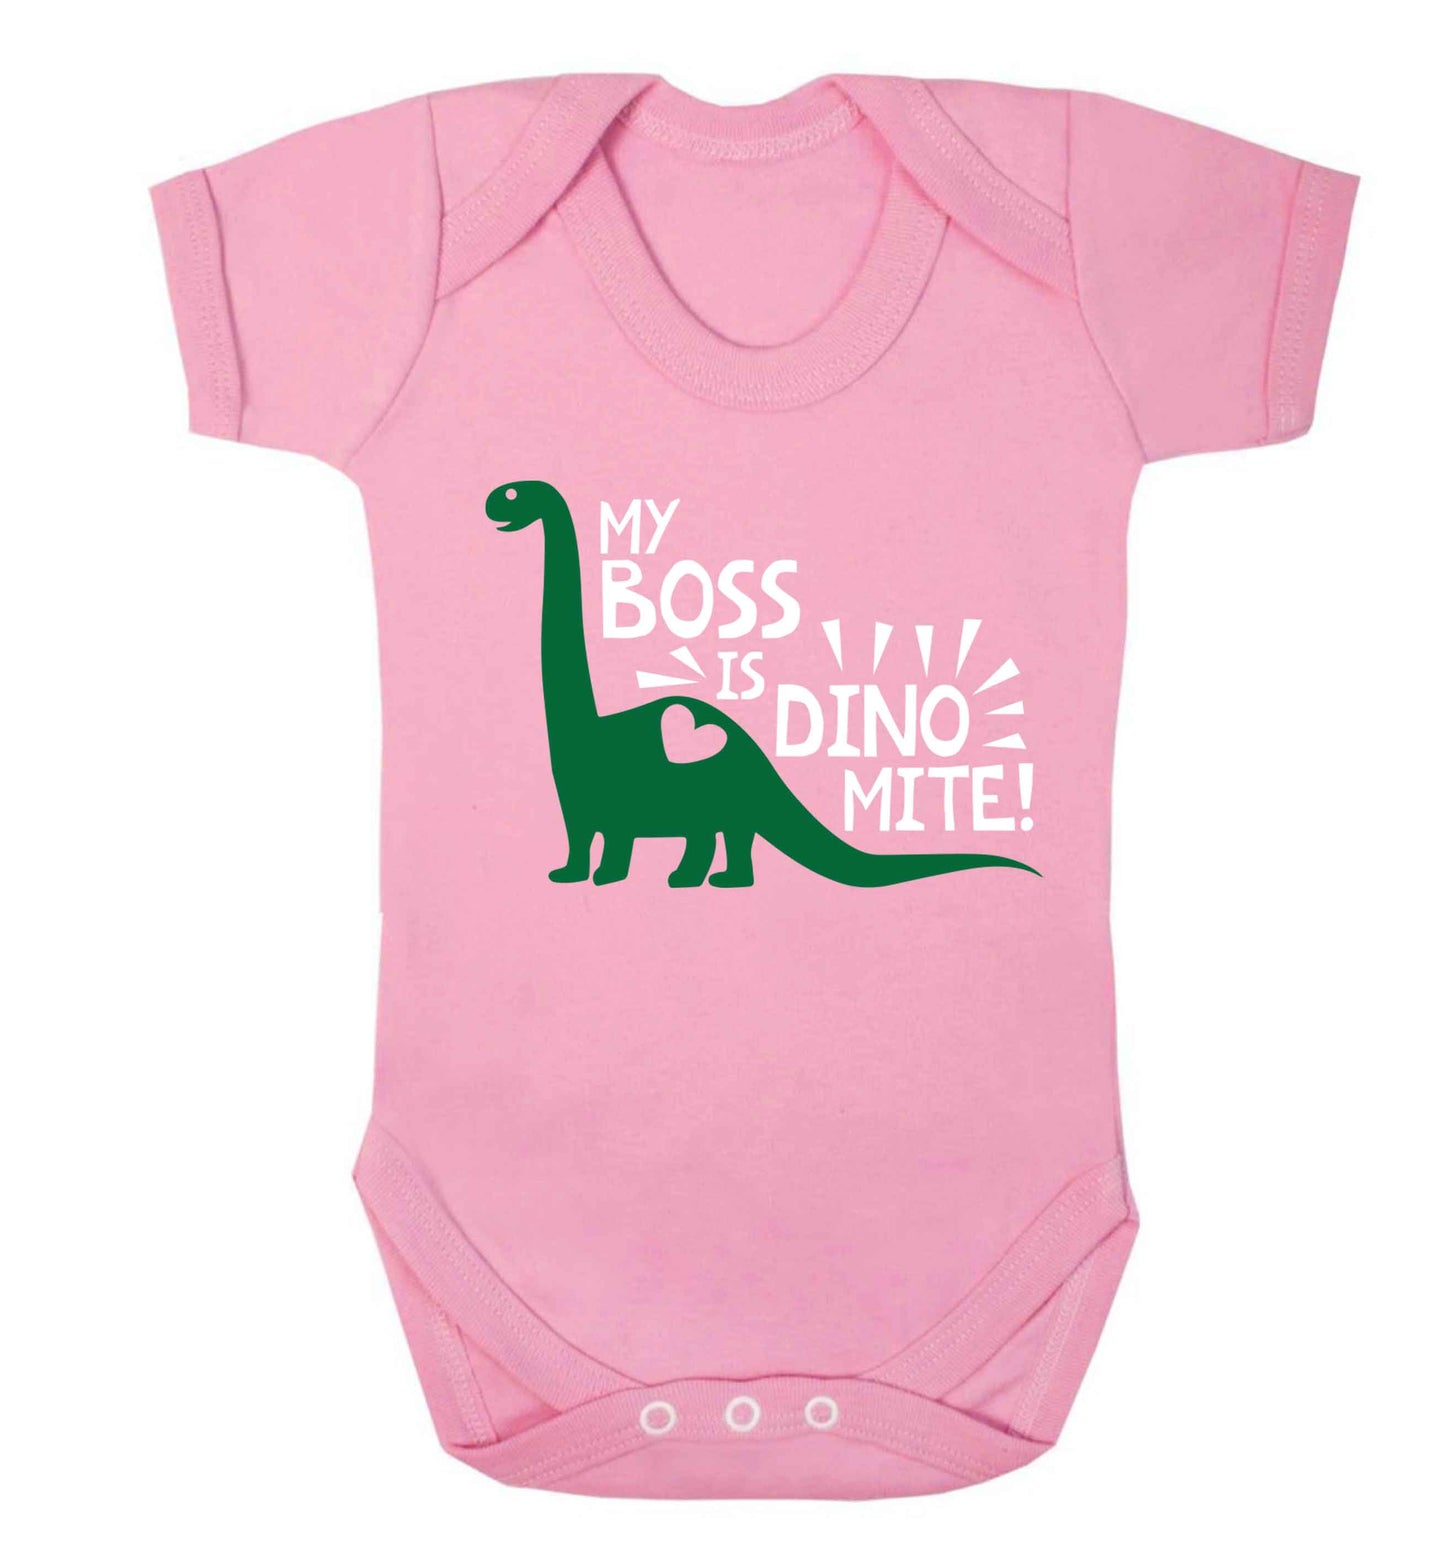 My boss is dinomite! Baby Vest pale pink 18-24 months